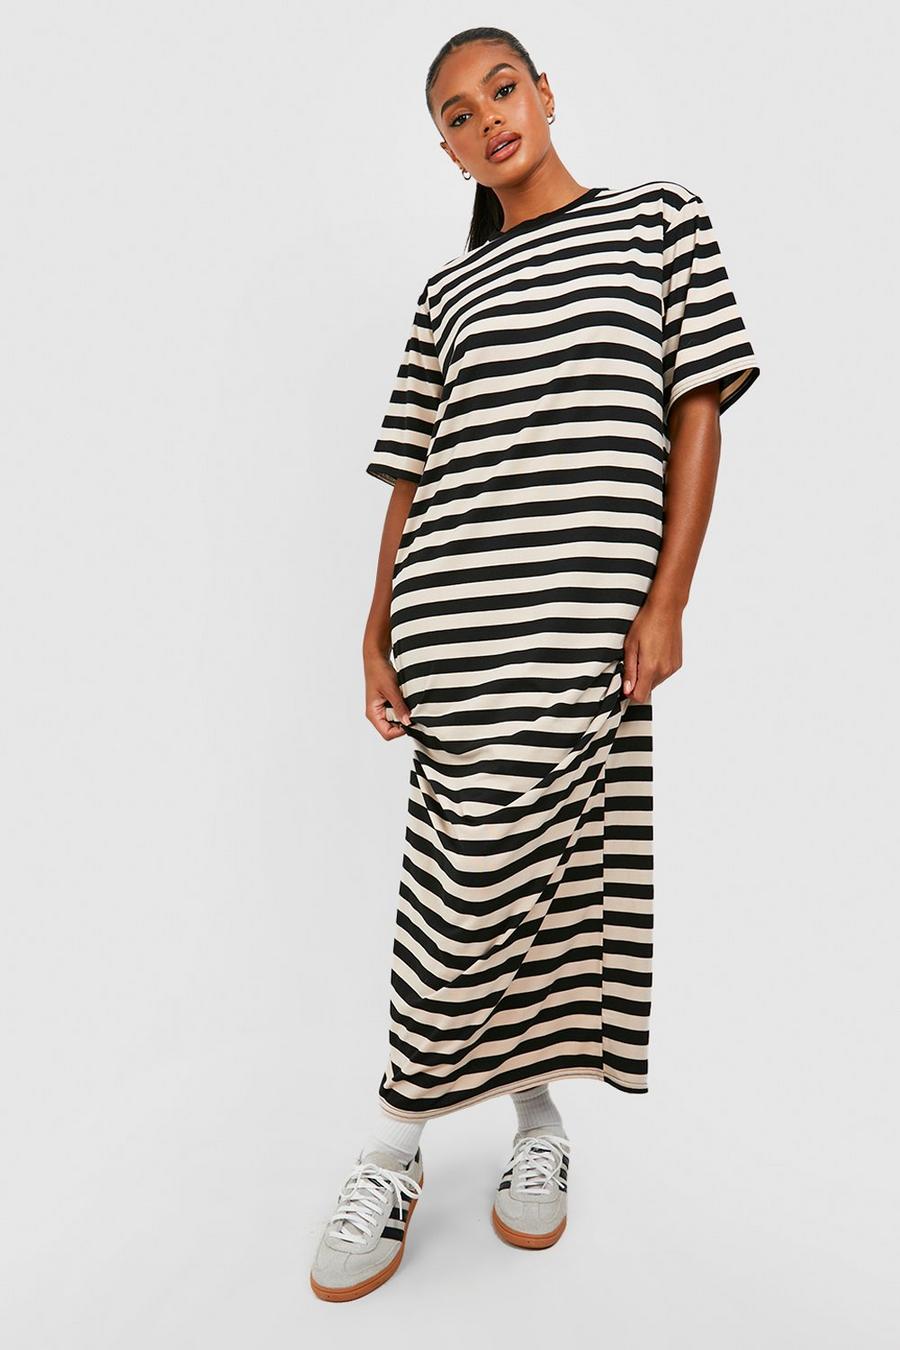 Striped Dresses, Maxi & Midi Striped Dresses